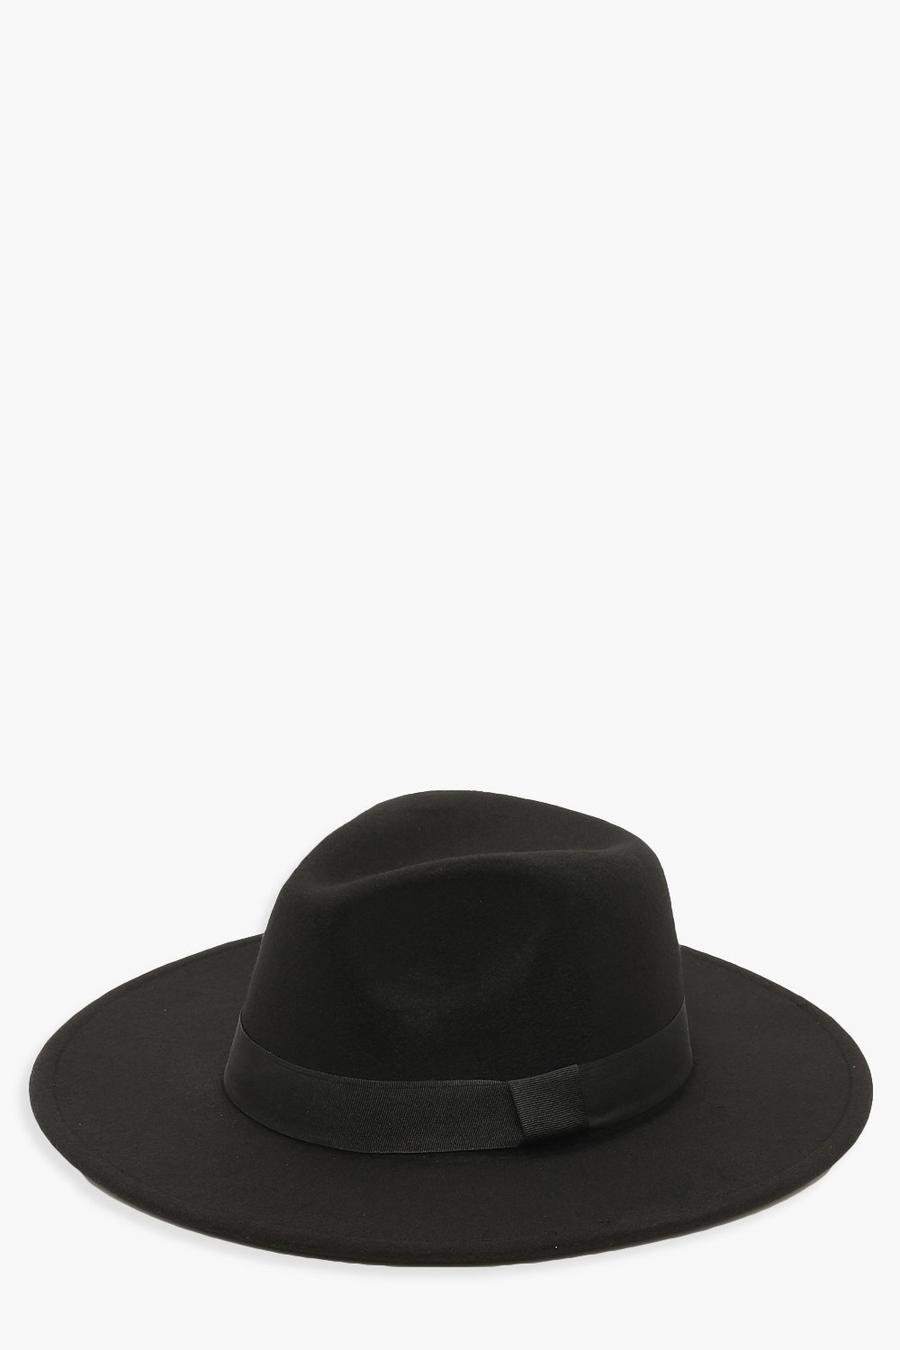 שחור negro כובע פדורה עם עיטור סרט image number 1